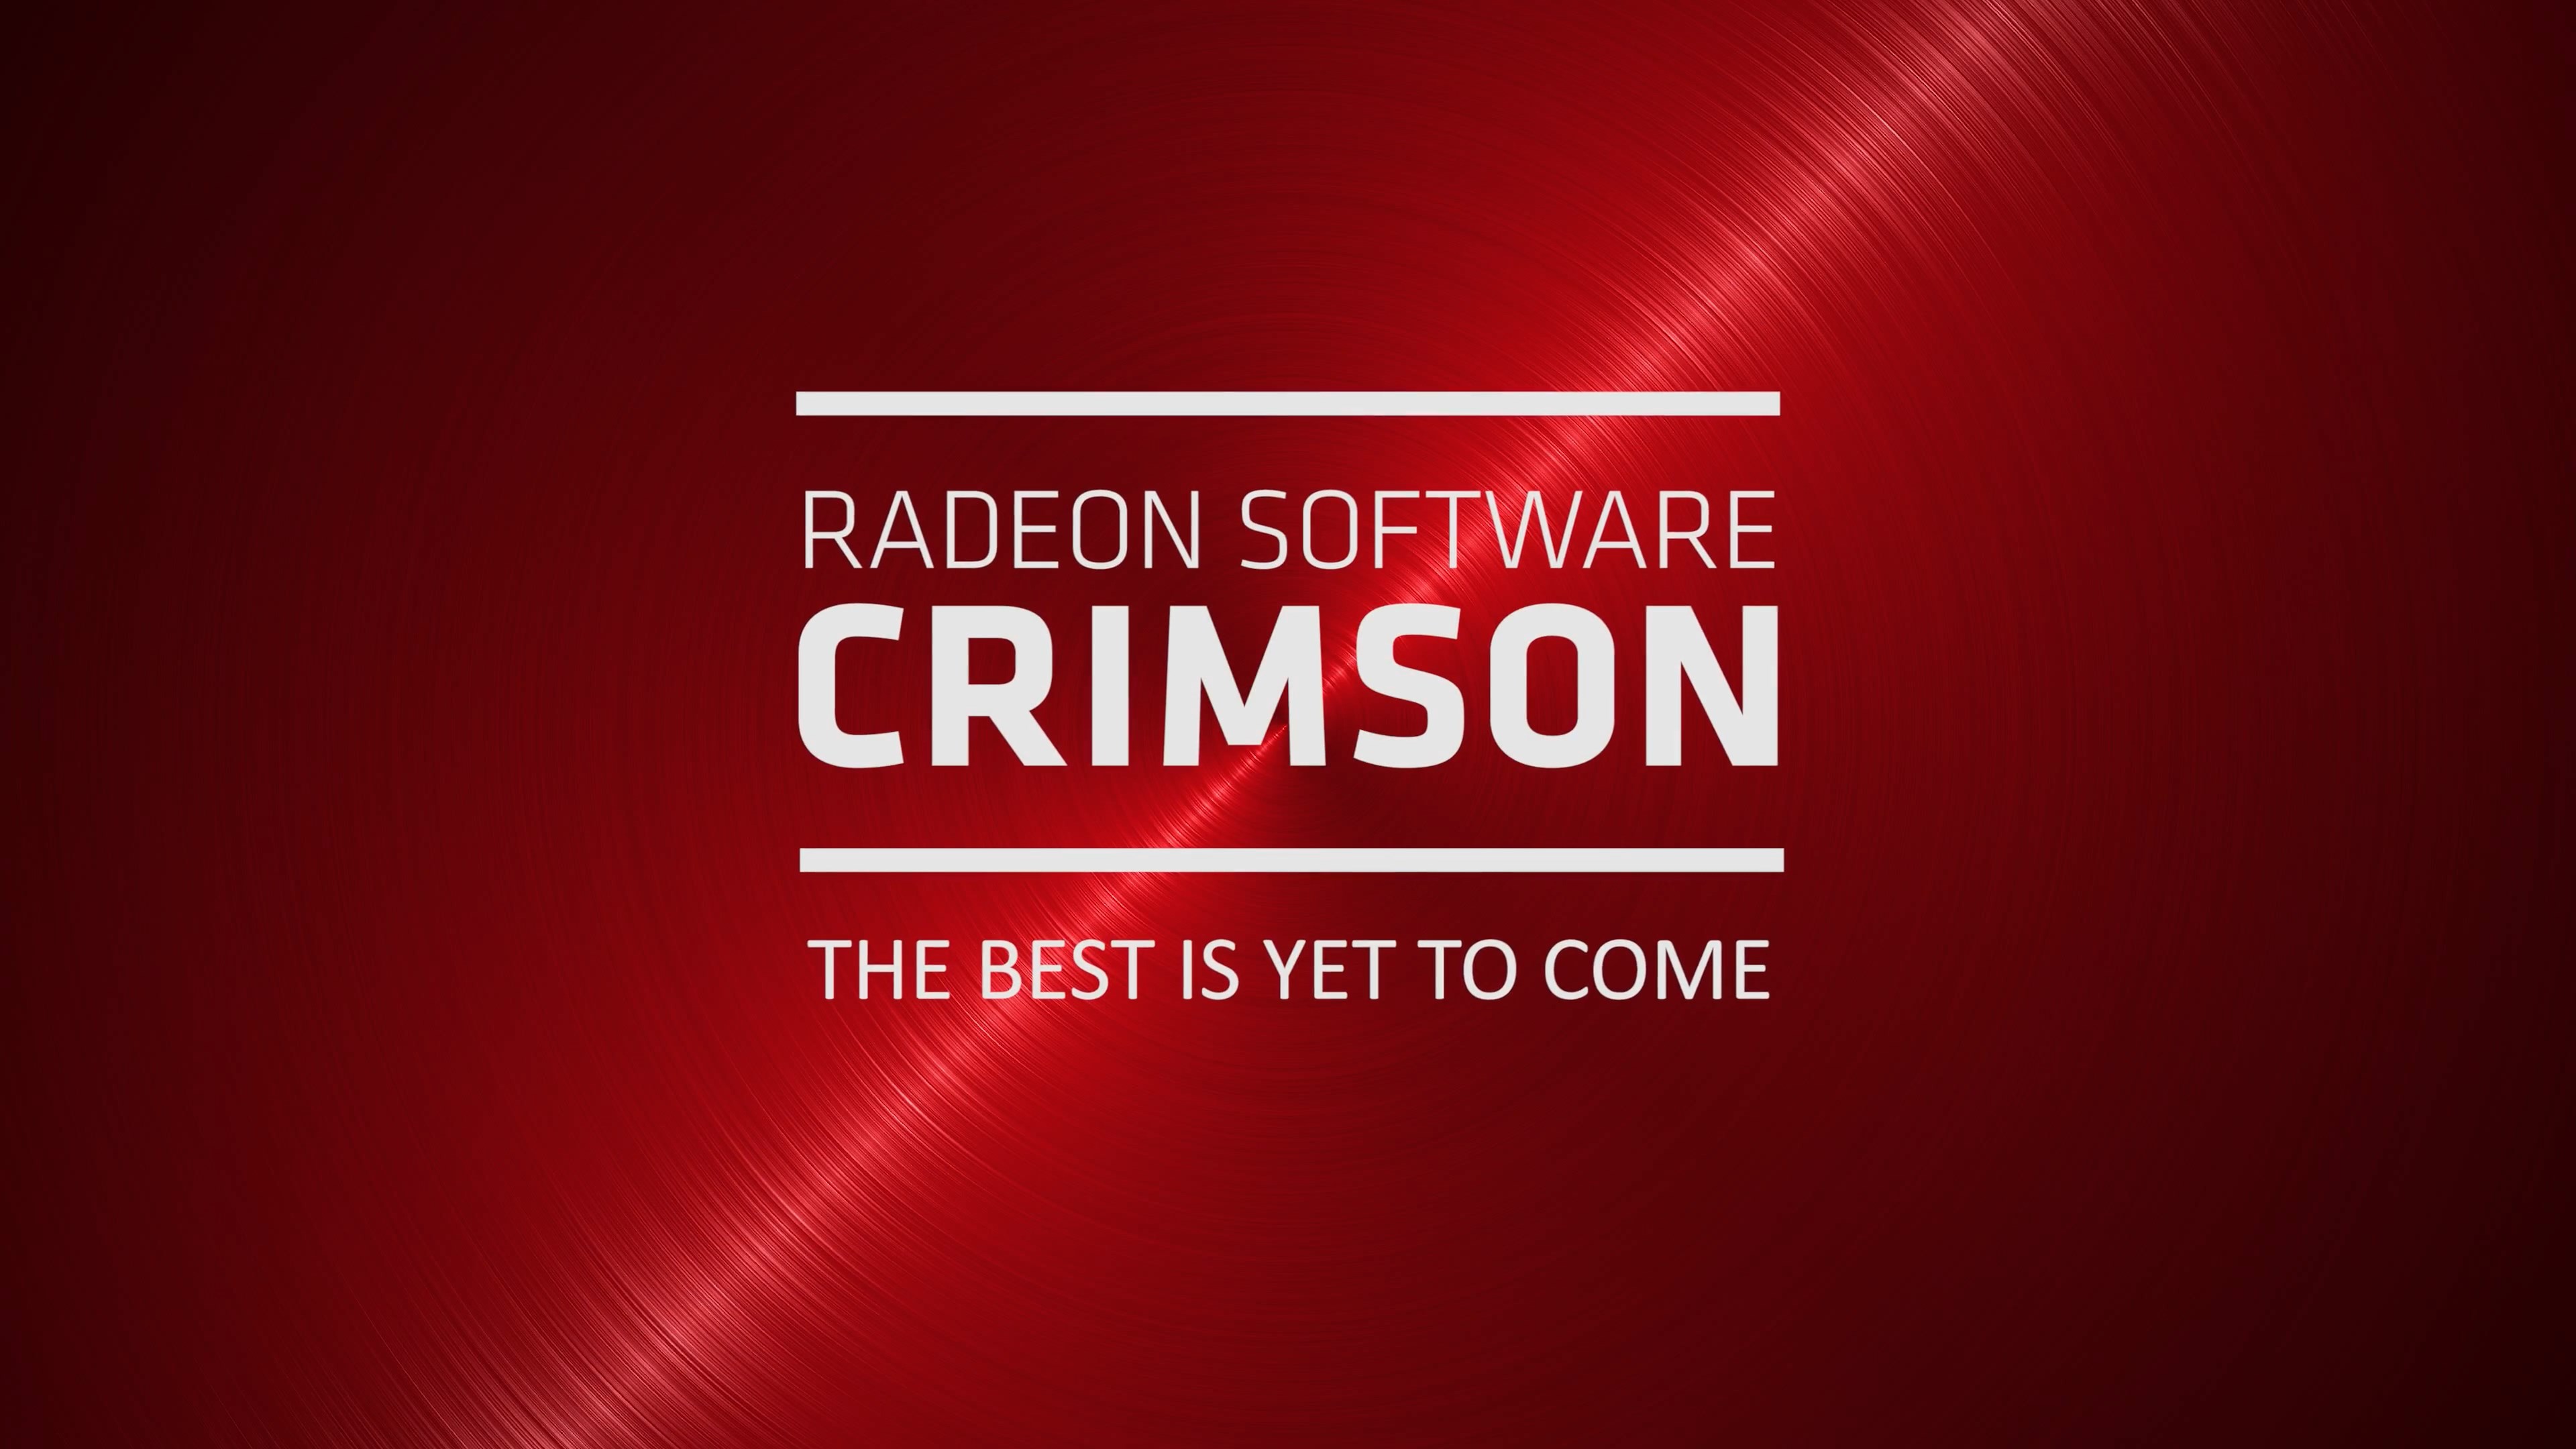 RIP AMD Catalyst, welcome Radeon Software : Crimson Edition 31